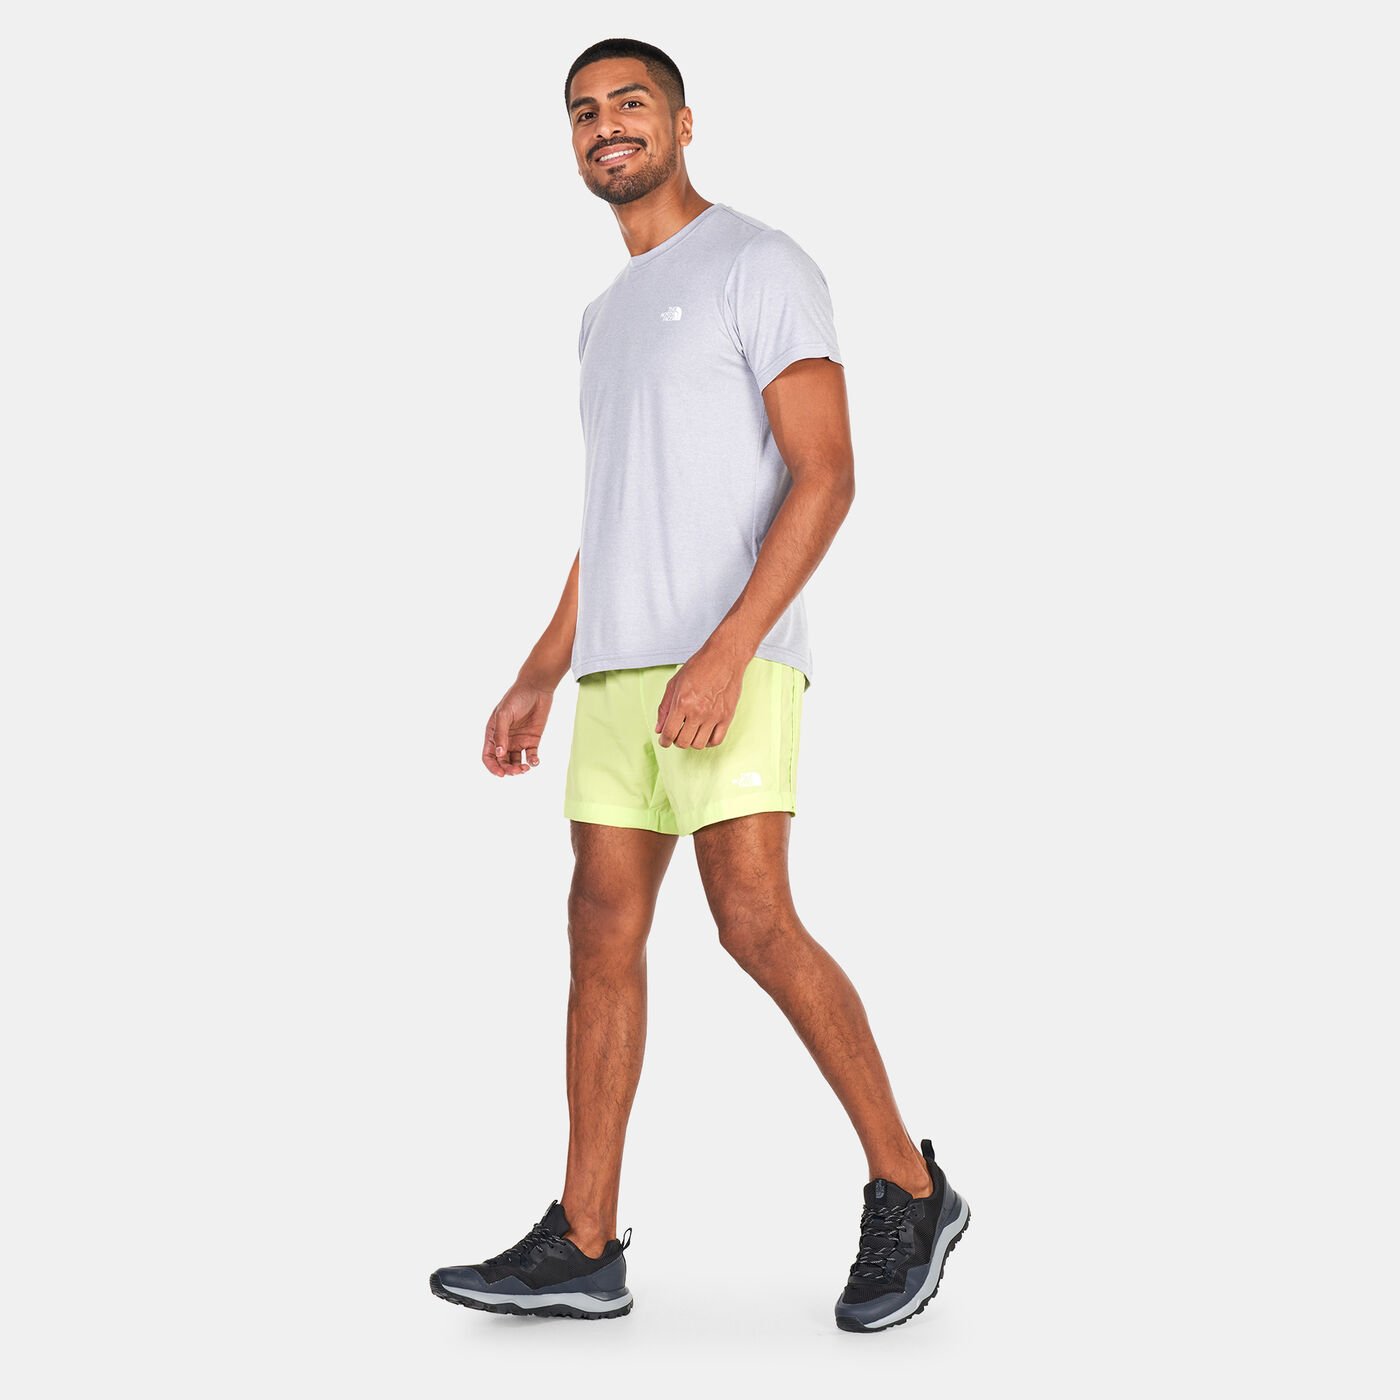 Men's Freedomlight Shorts